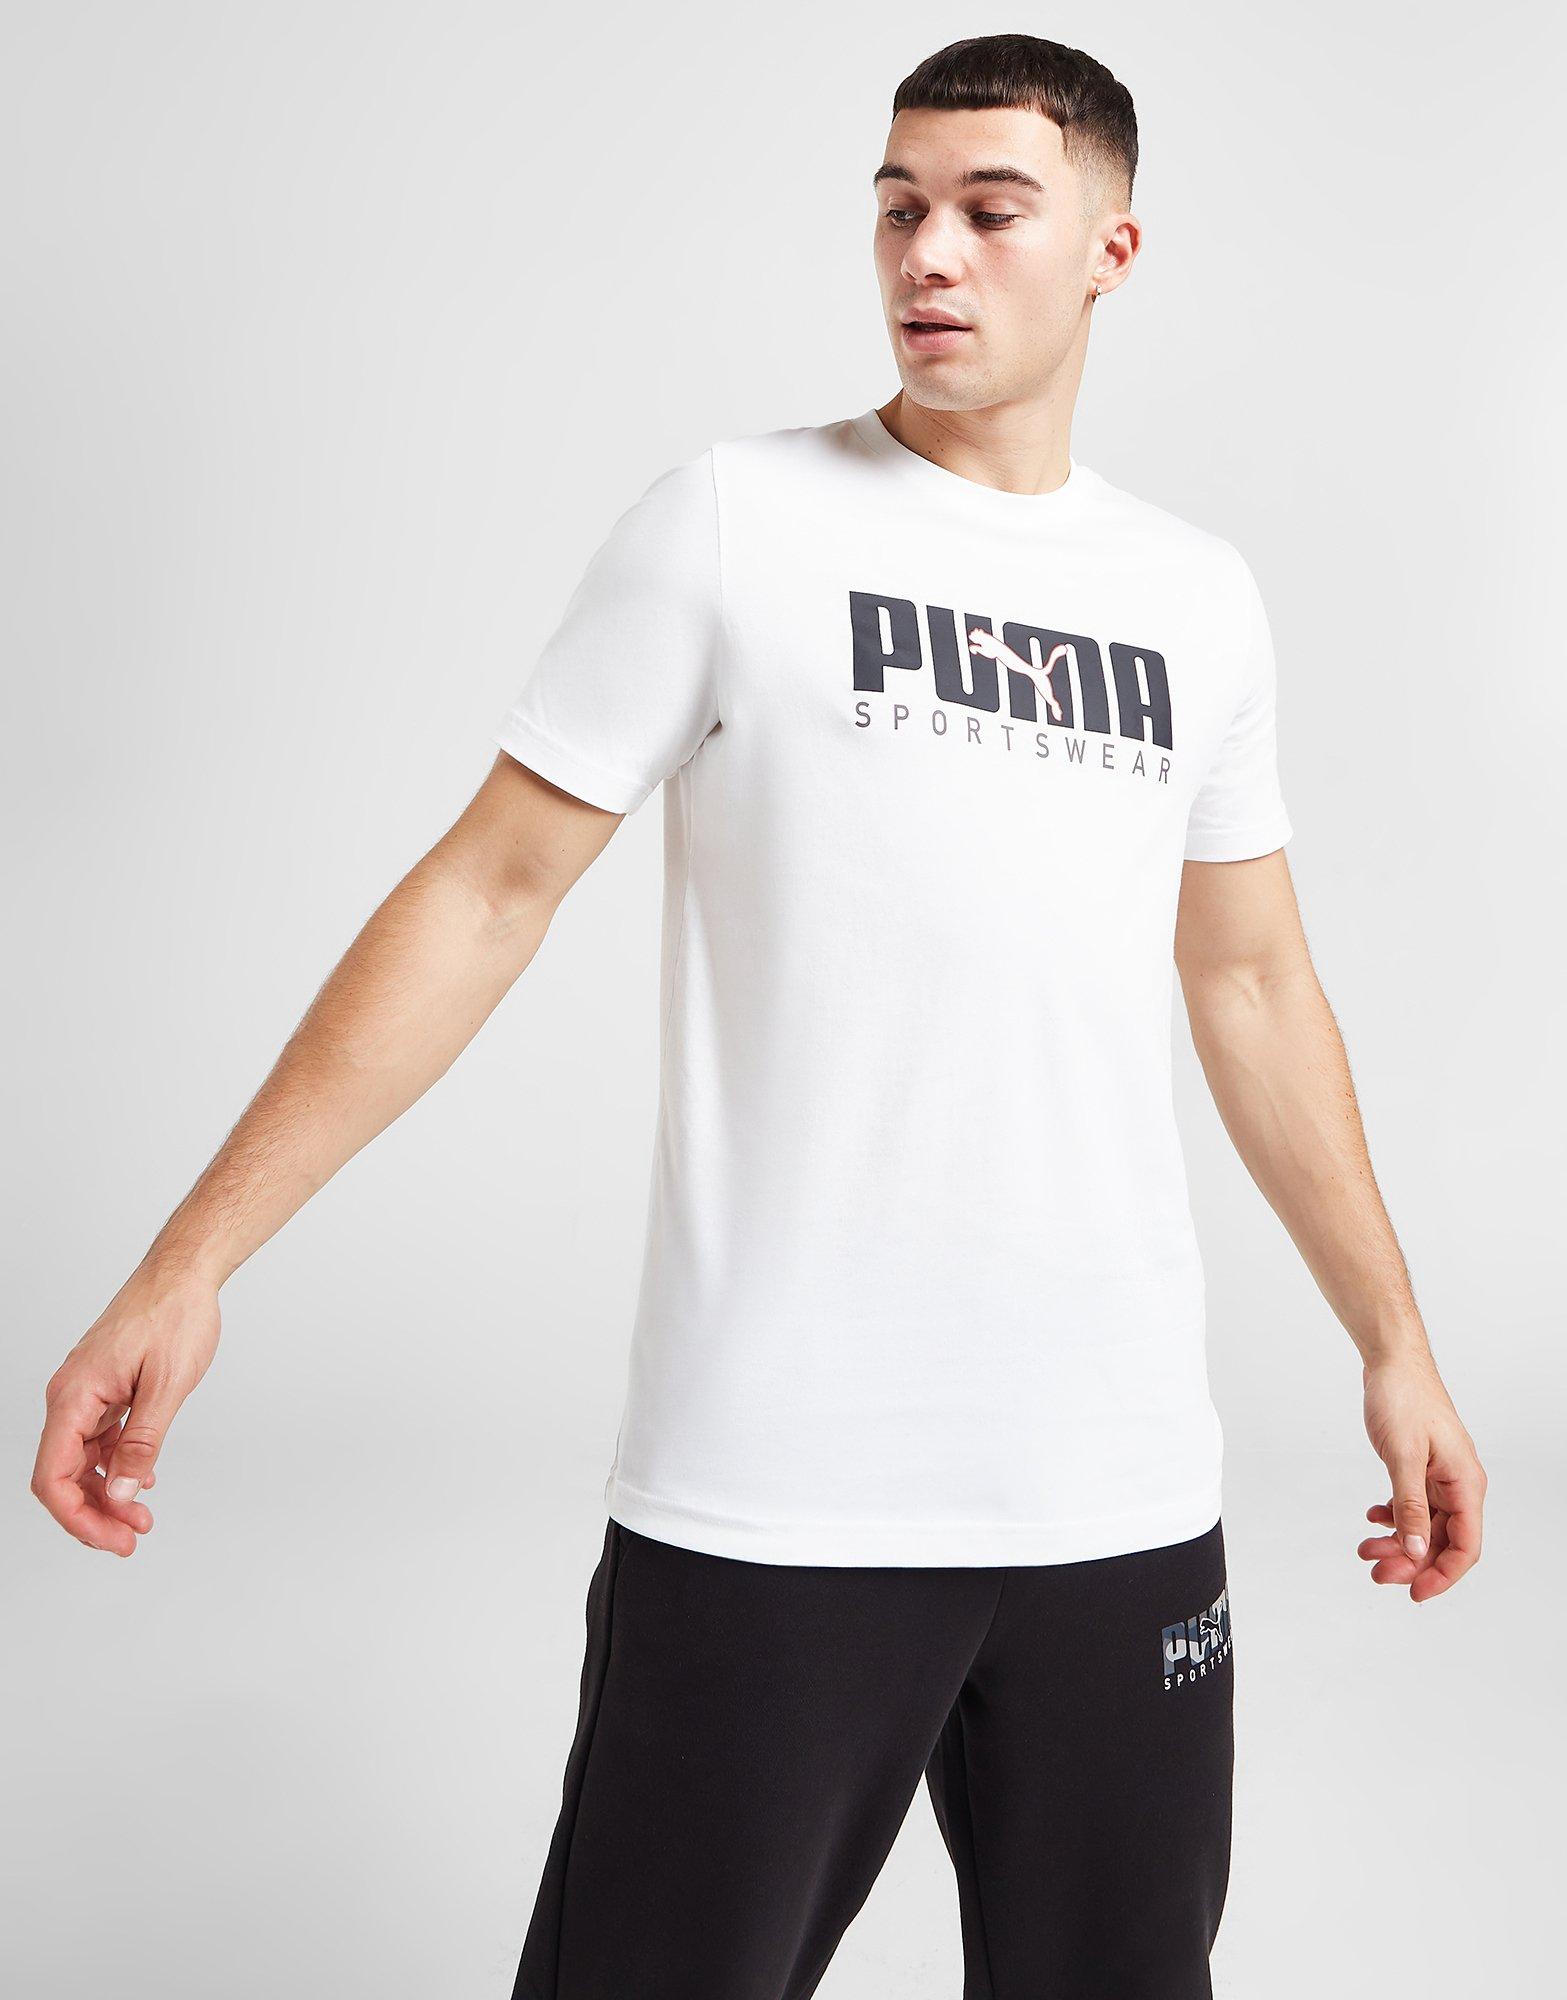 Puma Jogging Core Sportswear Homme Bleu- JD Sports France